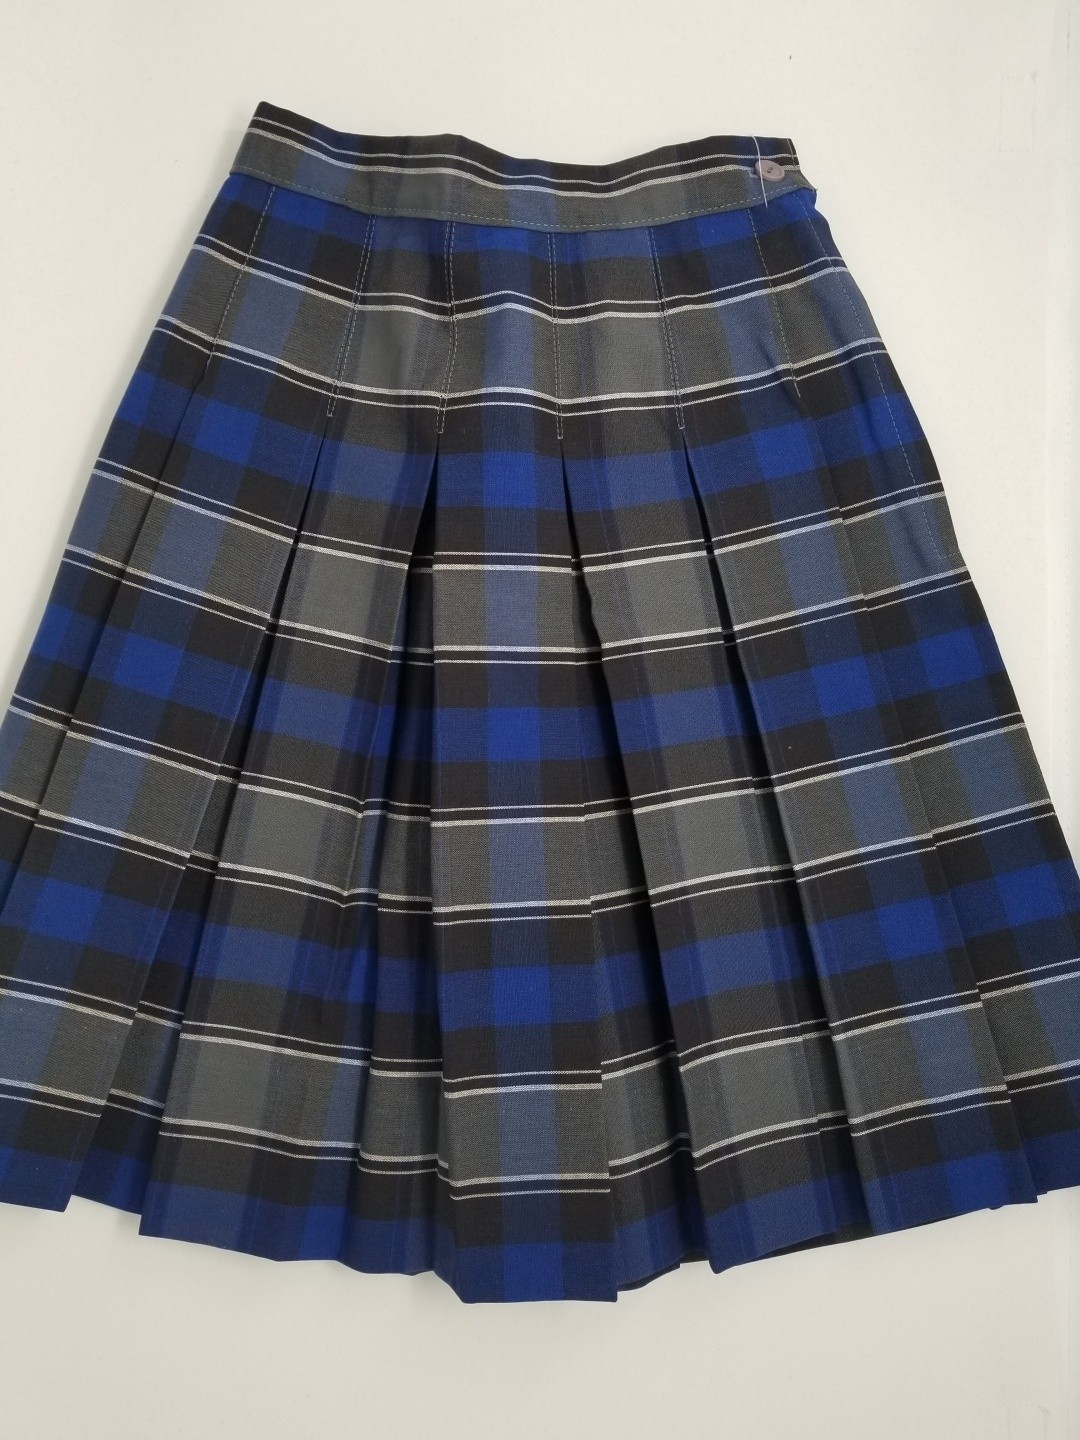 Stitch Down Pleat Skirt- Style 11-Plaid 88